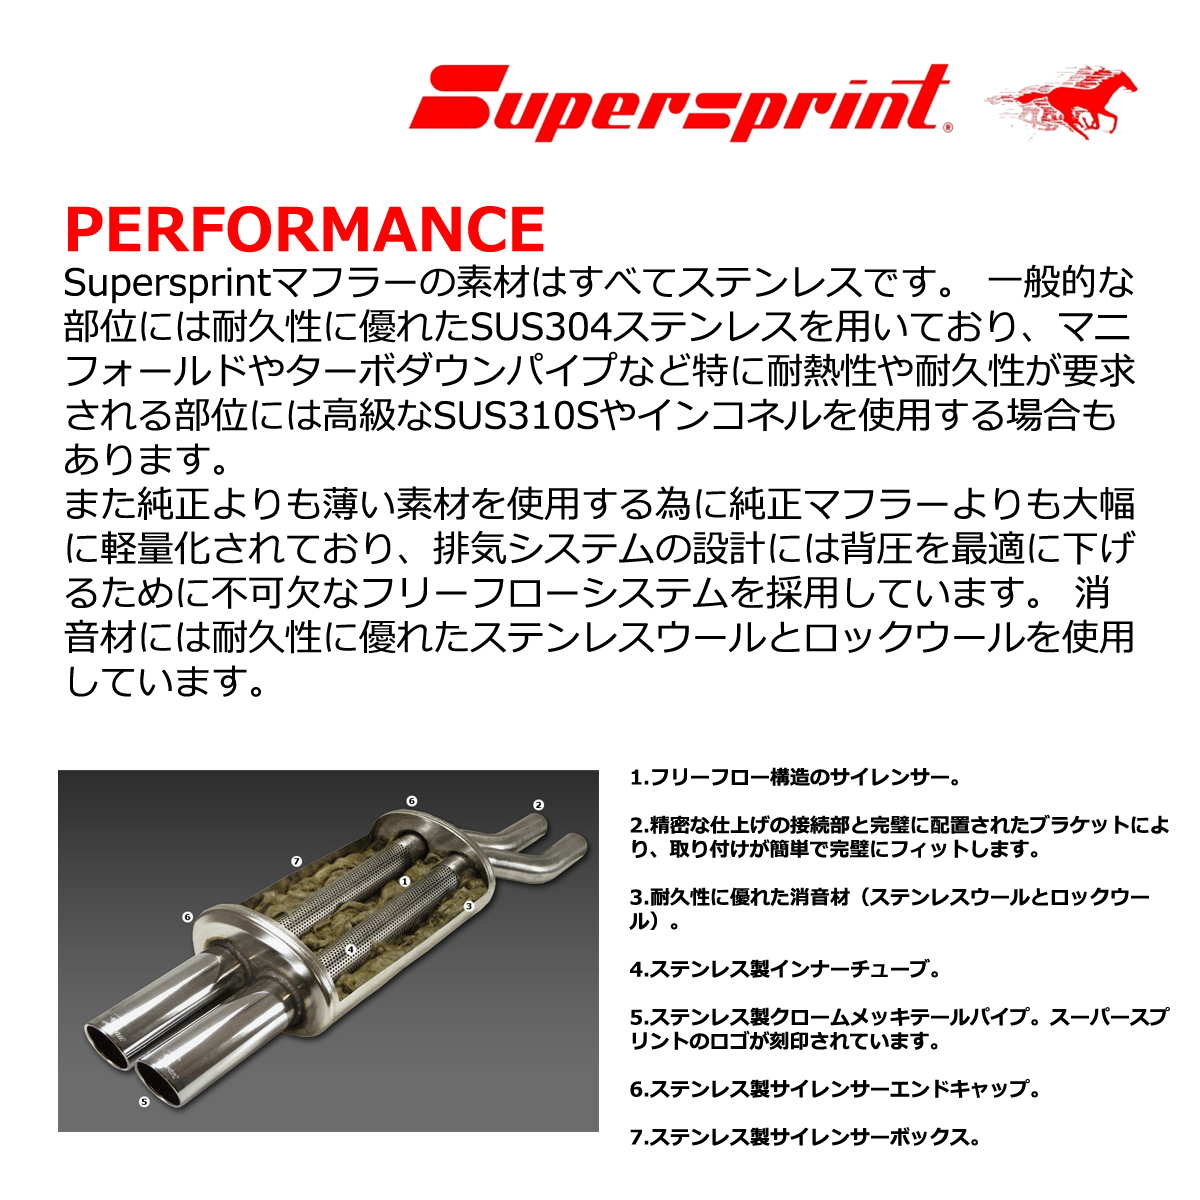 Supersprint リアマフラー BMW E31 850i ○○-○○90x85mm : ss-785056